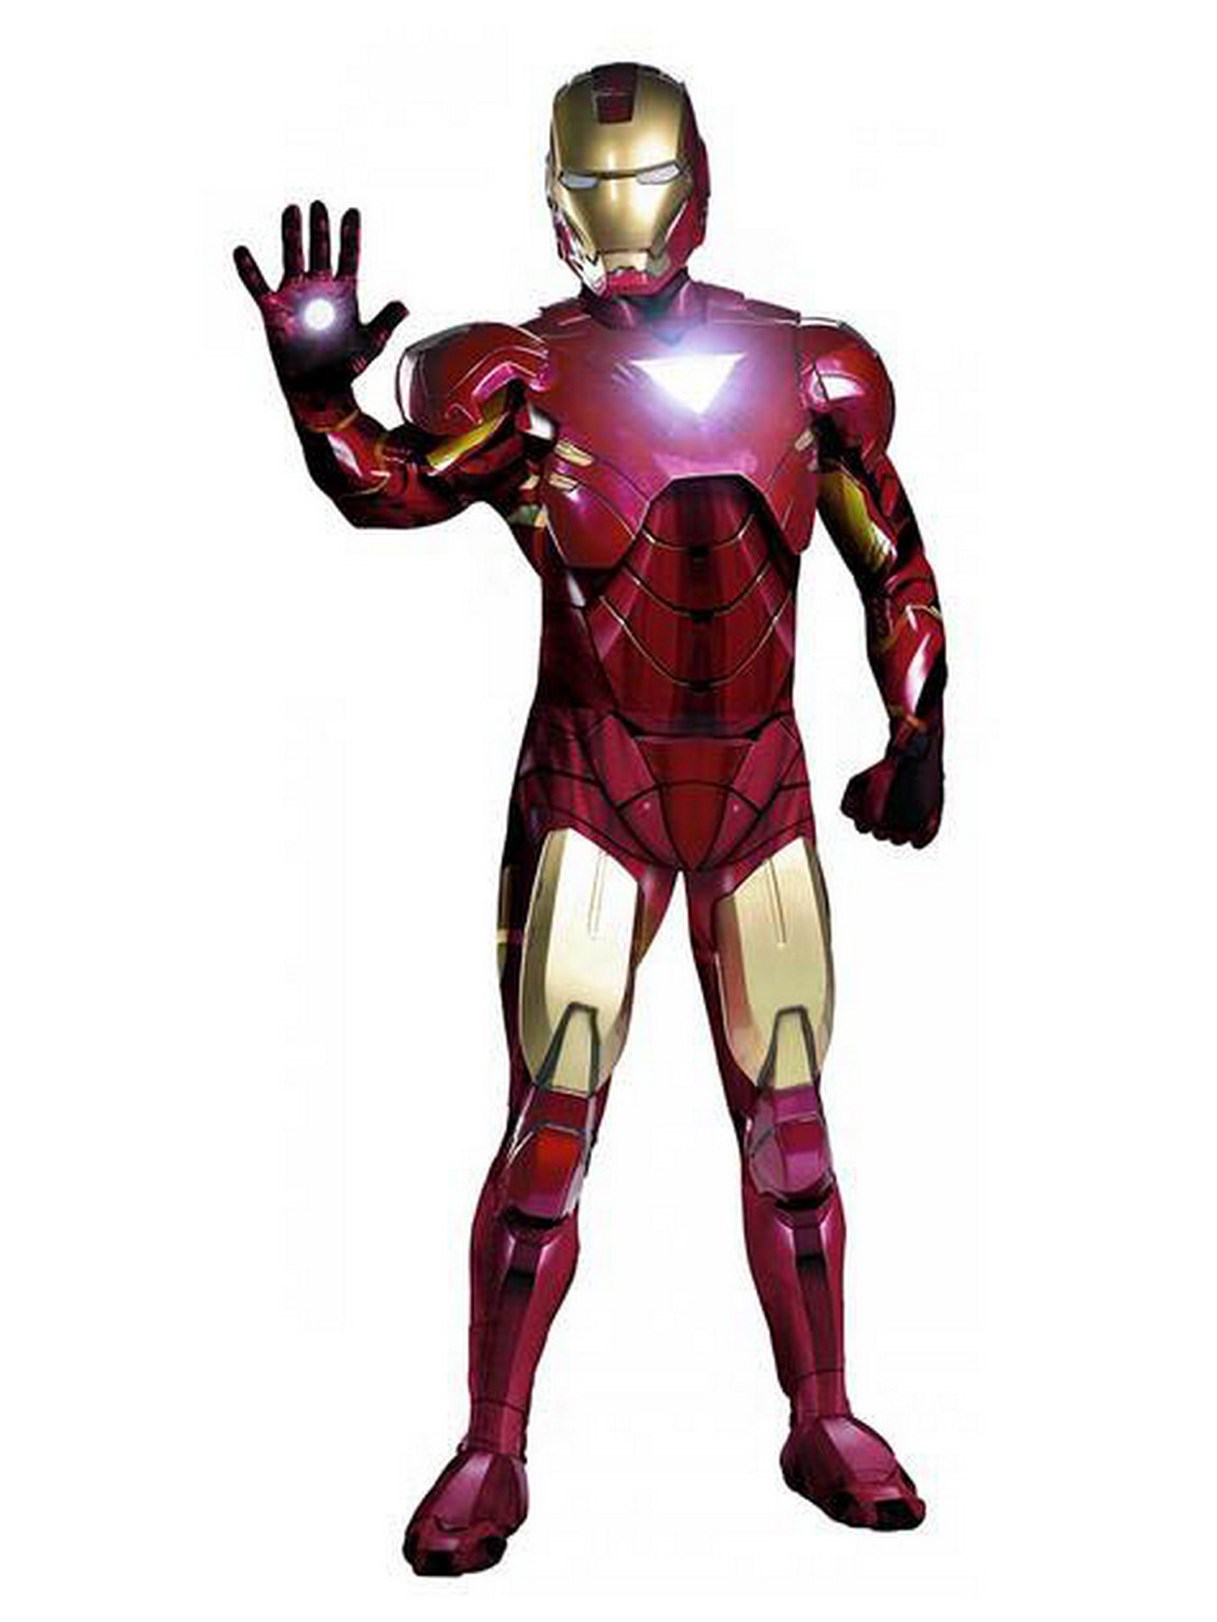 Iron Man Movie Version Adult Costume - Mark 6 Super Deluxe